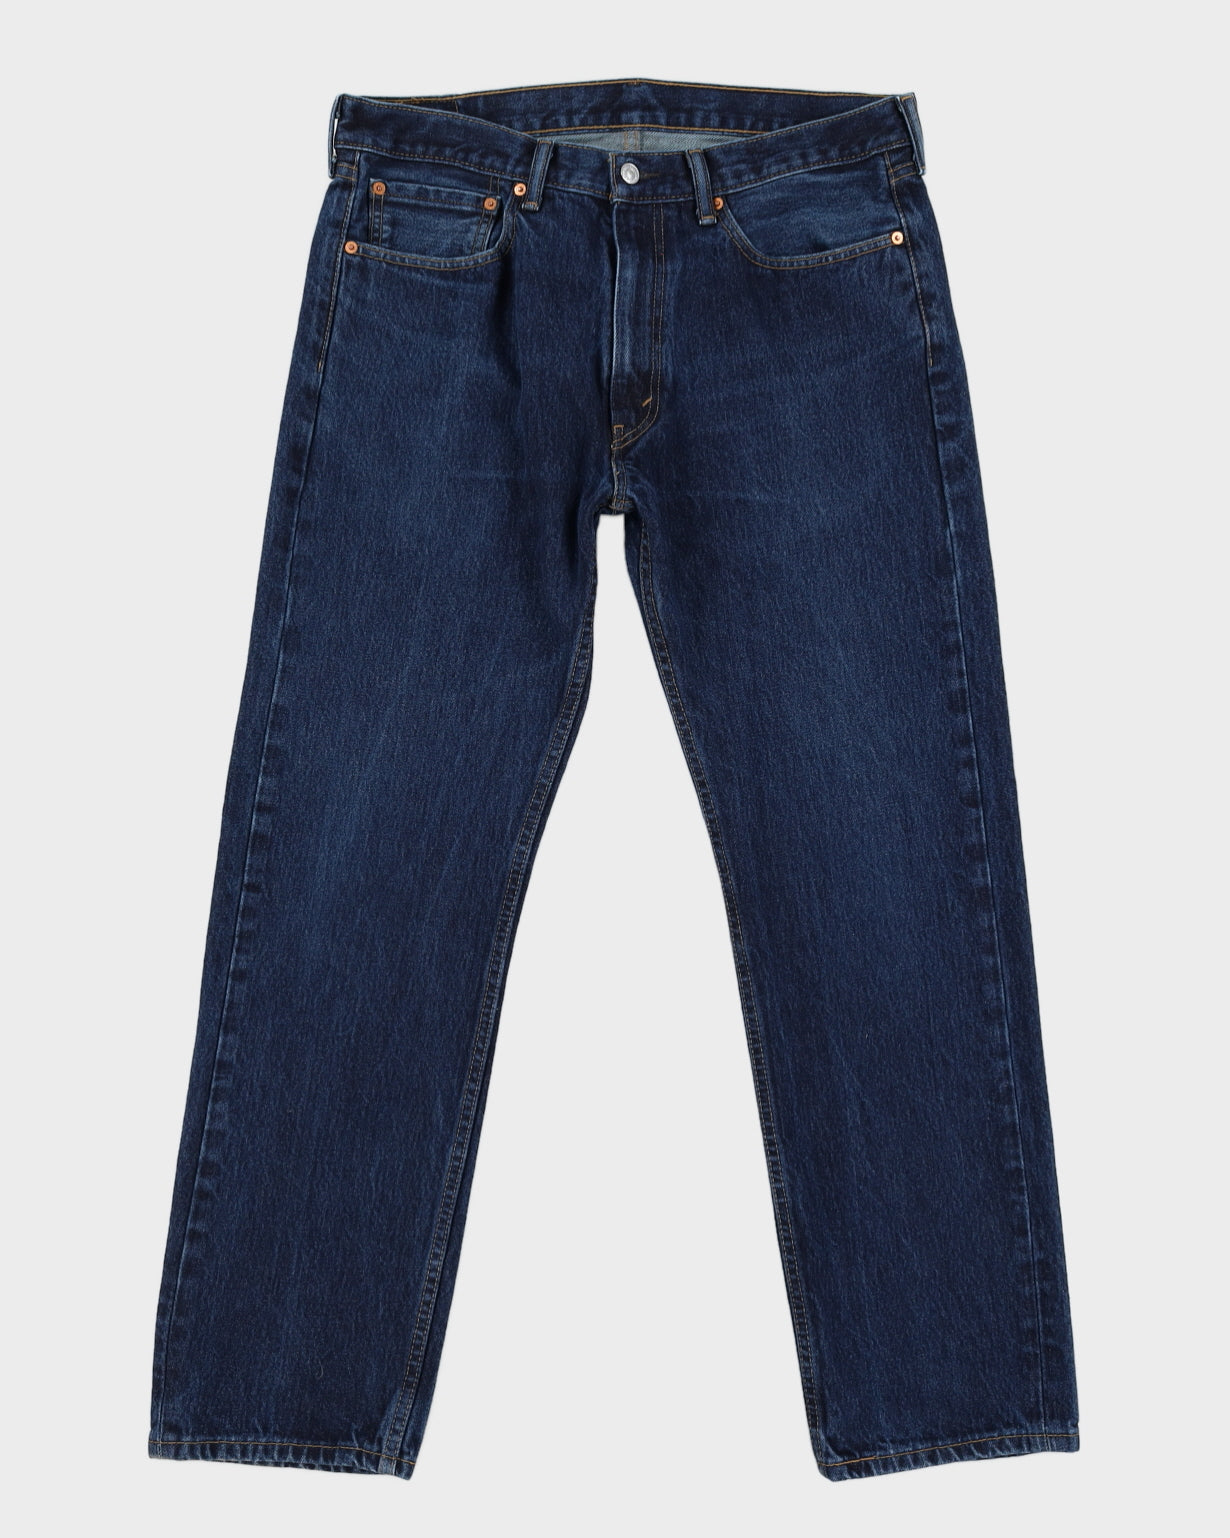 Levi's Darkwash 505 Jeans - W36 L32